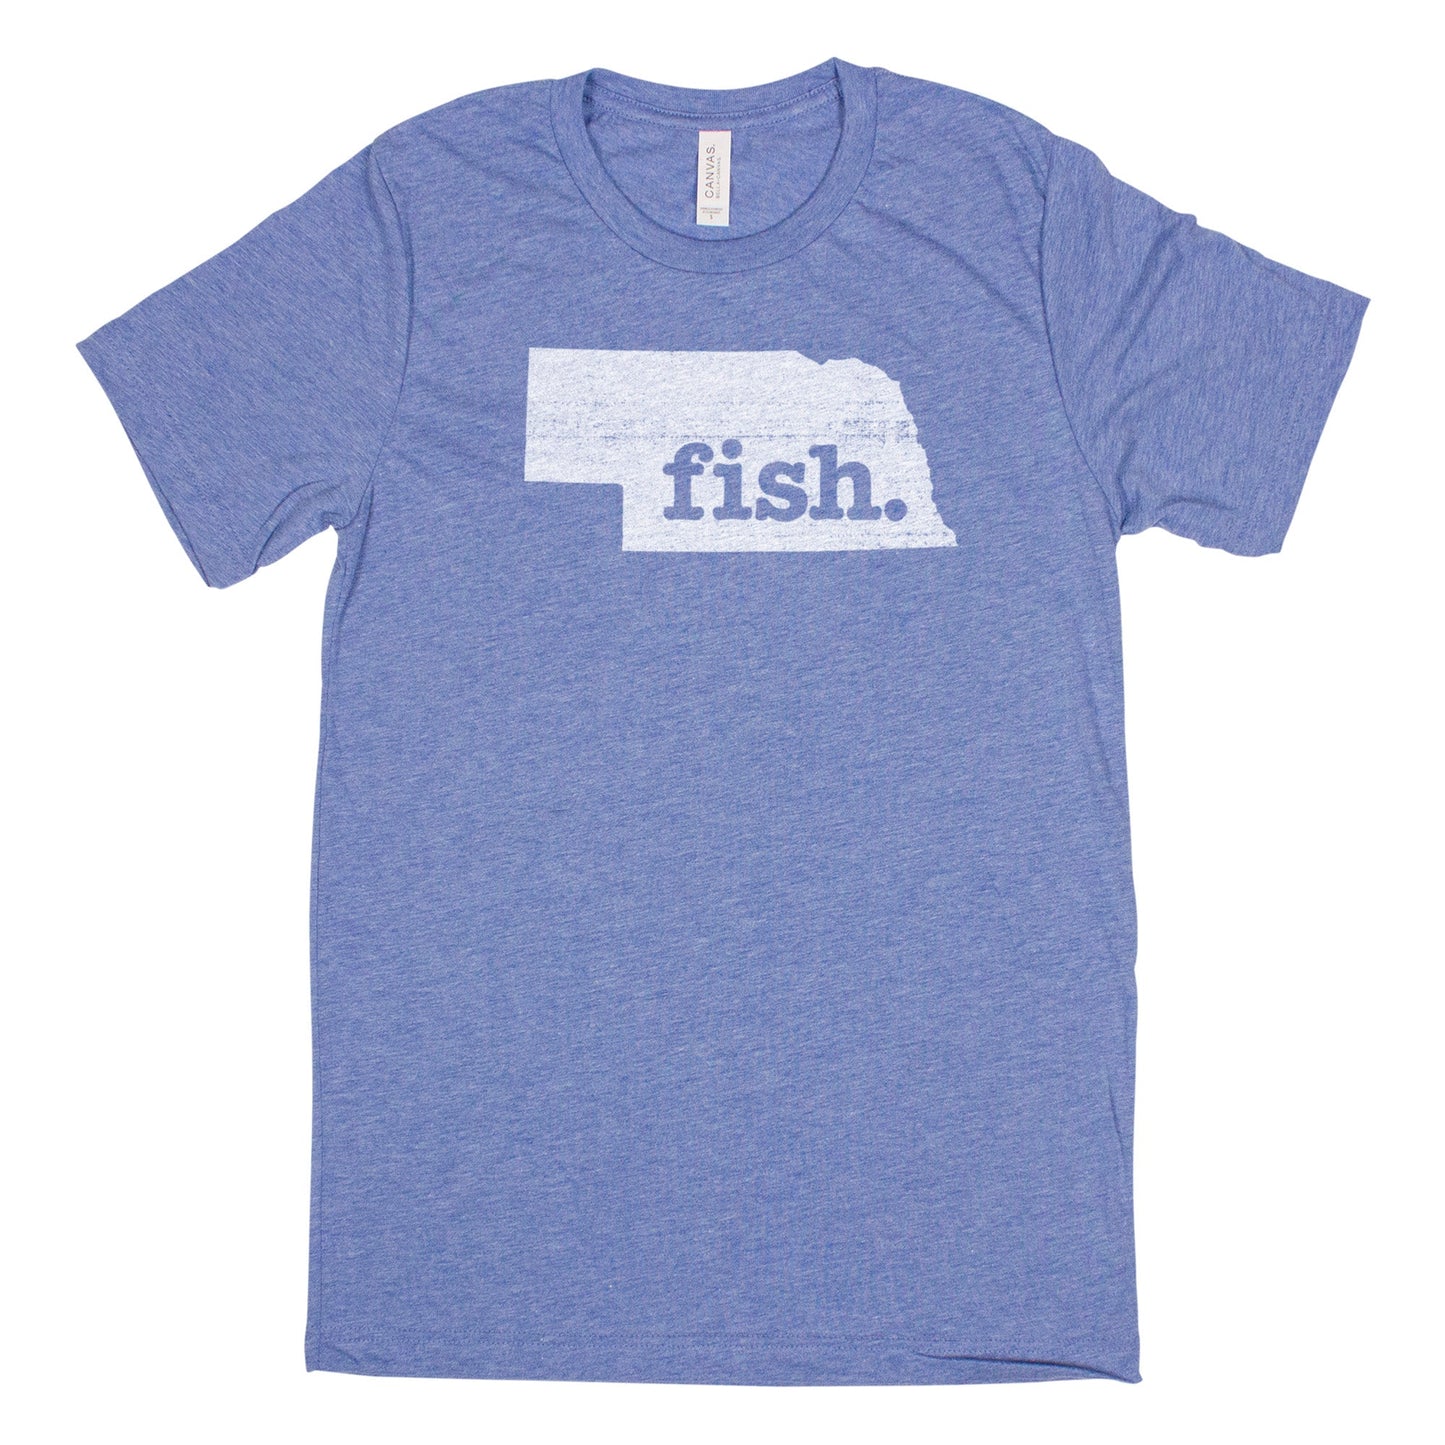 fish. Men's Unisex T-Shirt - Nebraska